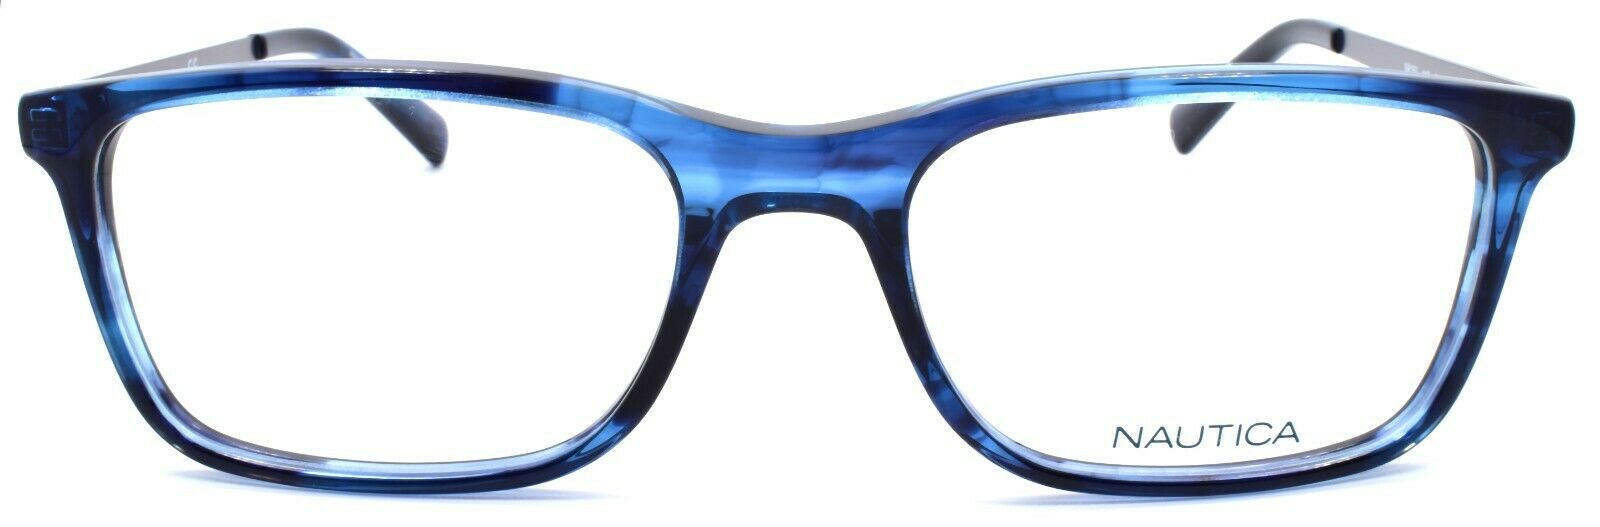 2-Nautica N8153 445 Men's Eyeglasses Frames 56-19-140 Blue Havana-688940463231-IKSpecs